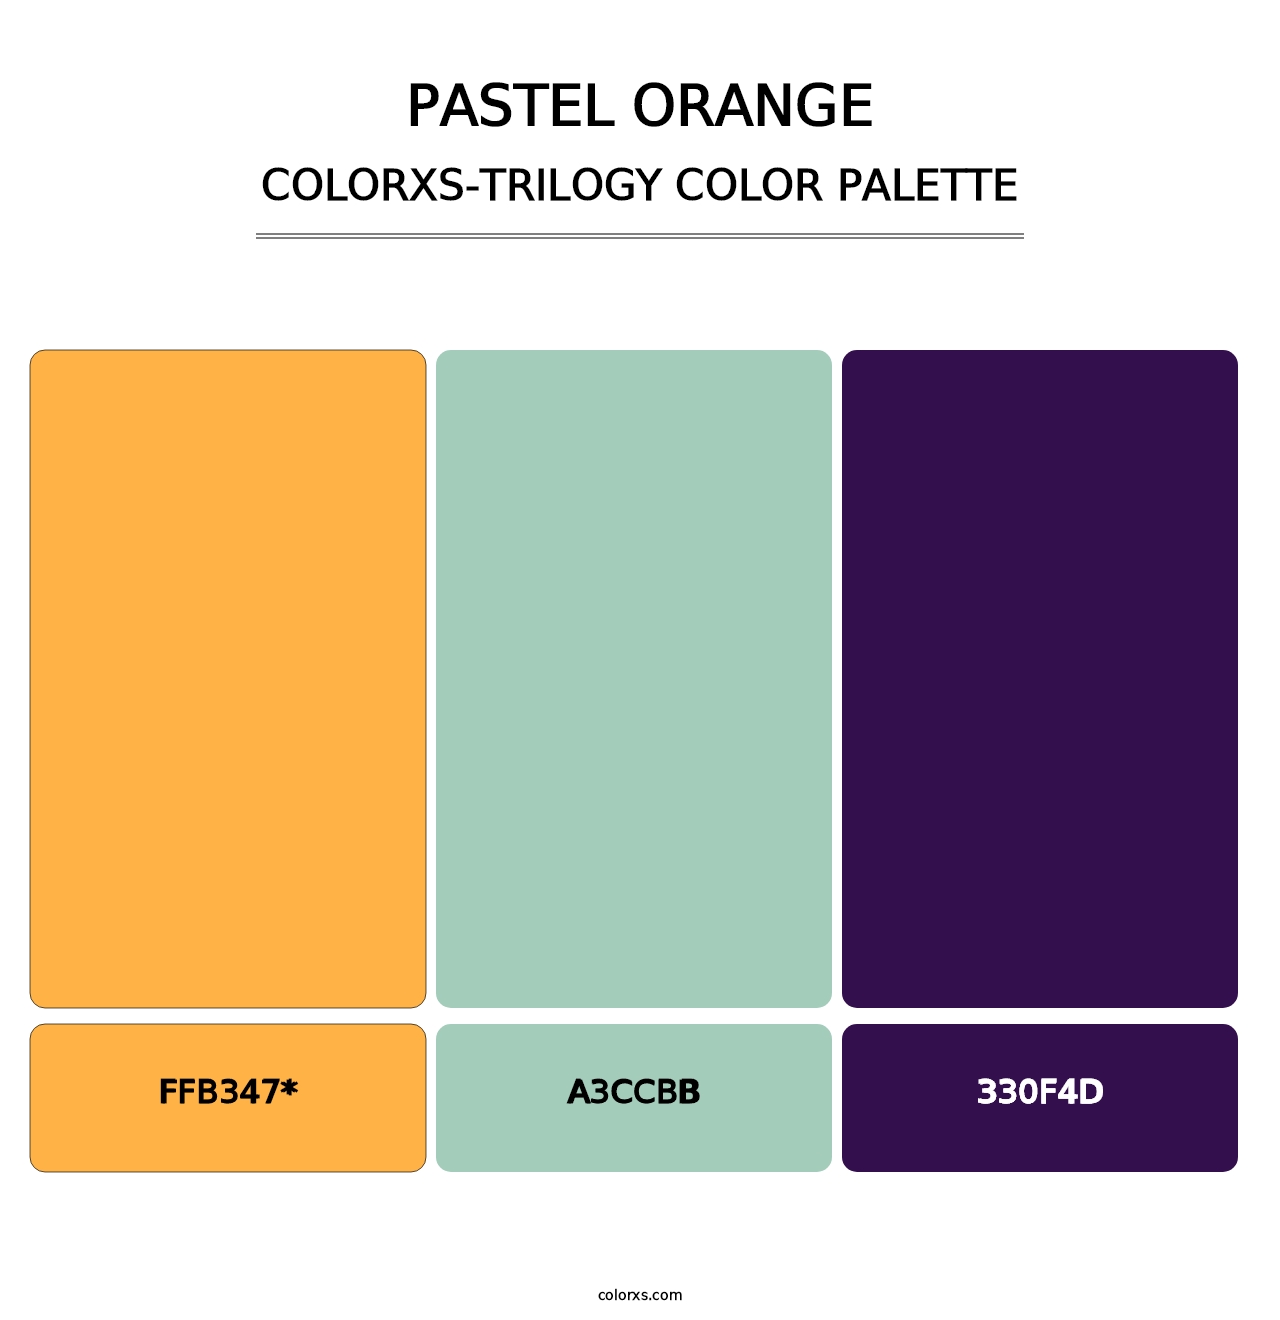 Pastel Orange - Colorxs Trilogy Palette